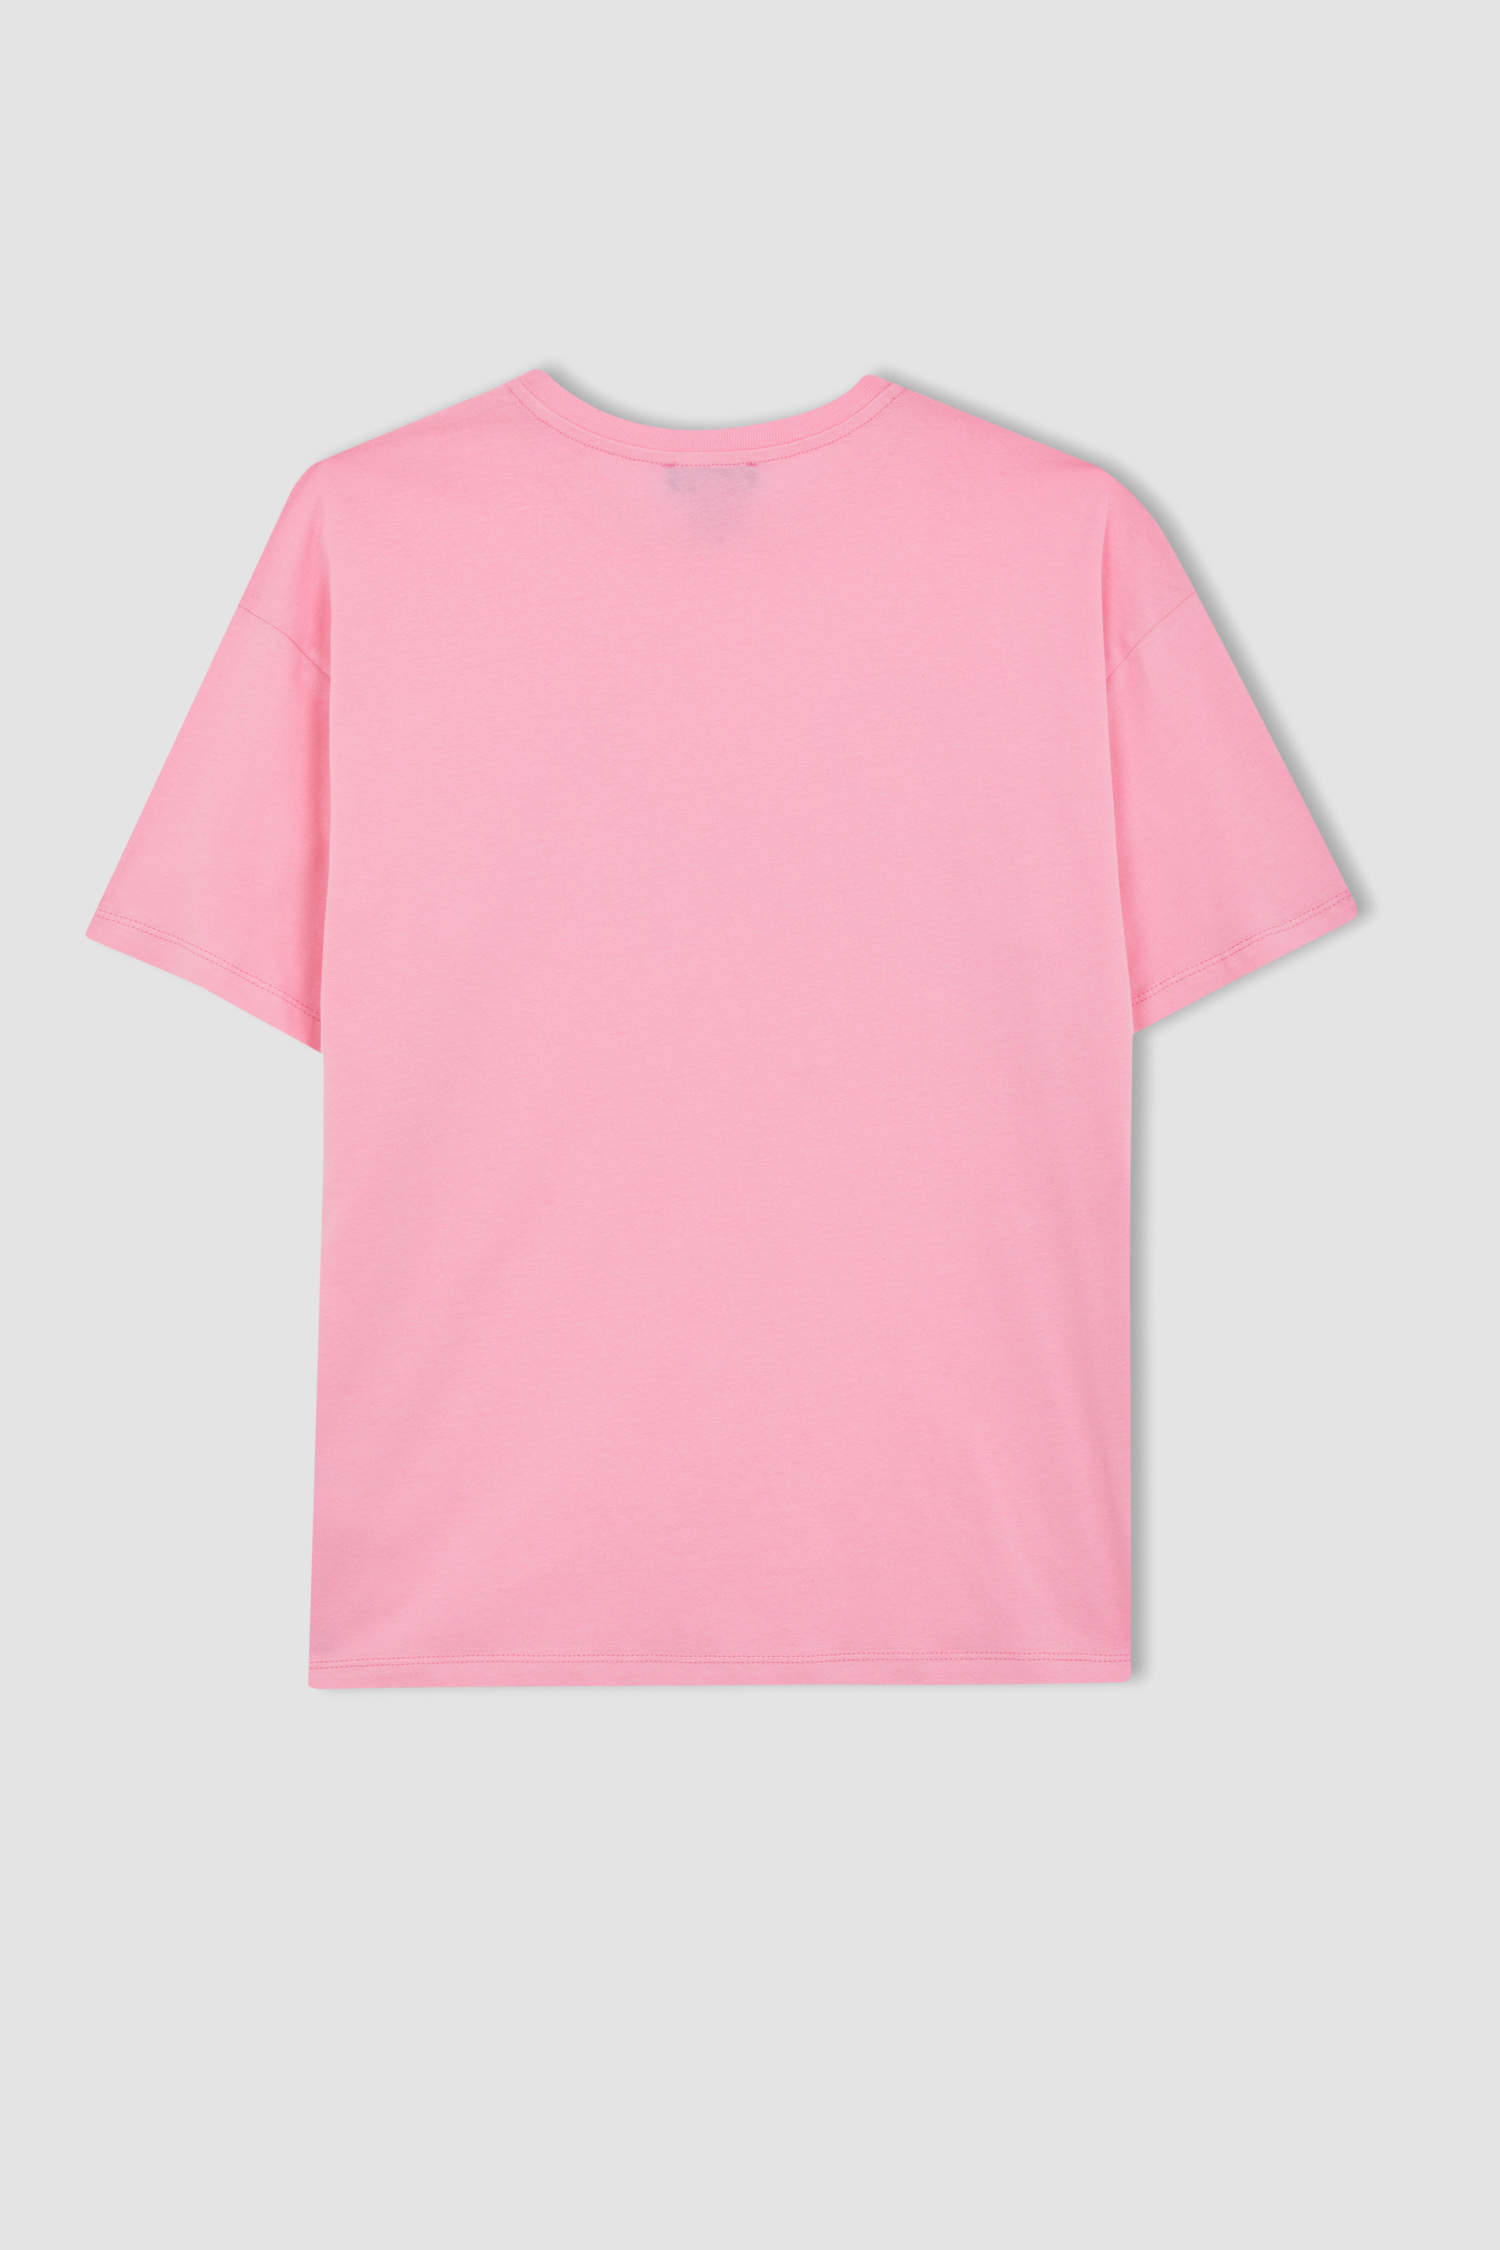 Pink Woman Oversize Fit Barbie Licensed Short Sleeve T-Shirt